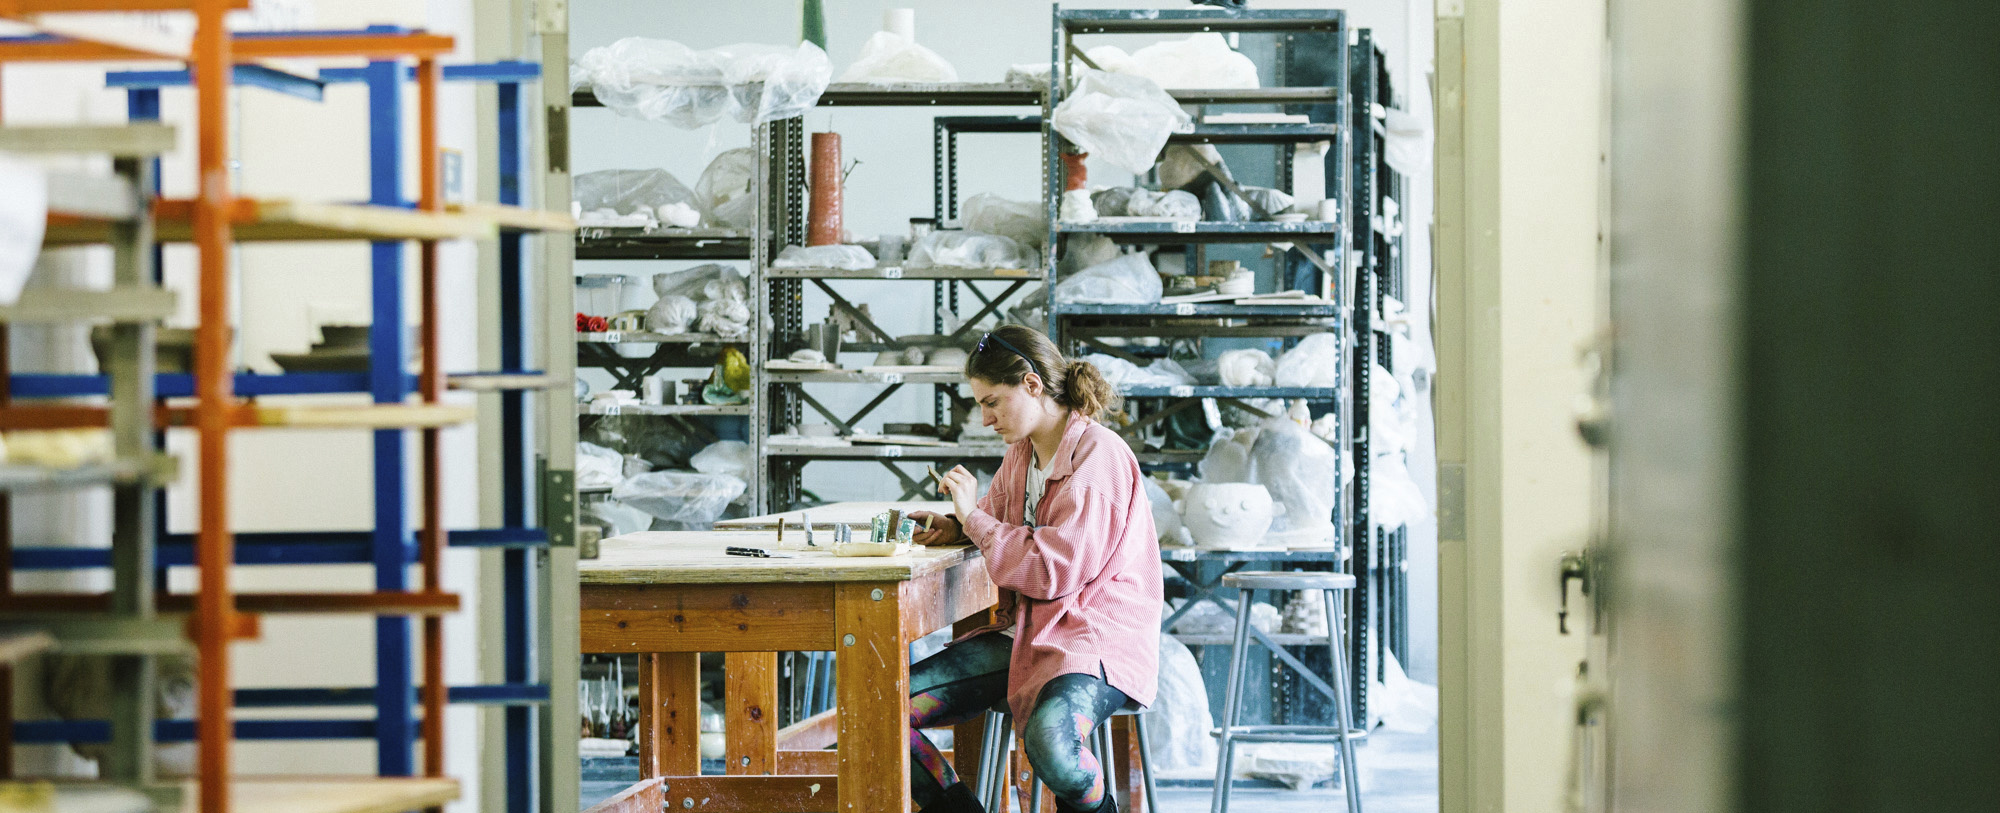 A student works inside a kiln studio.